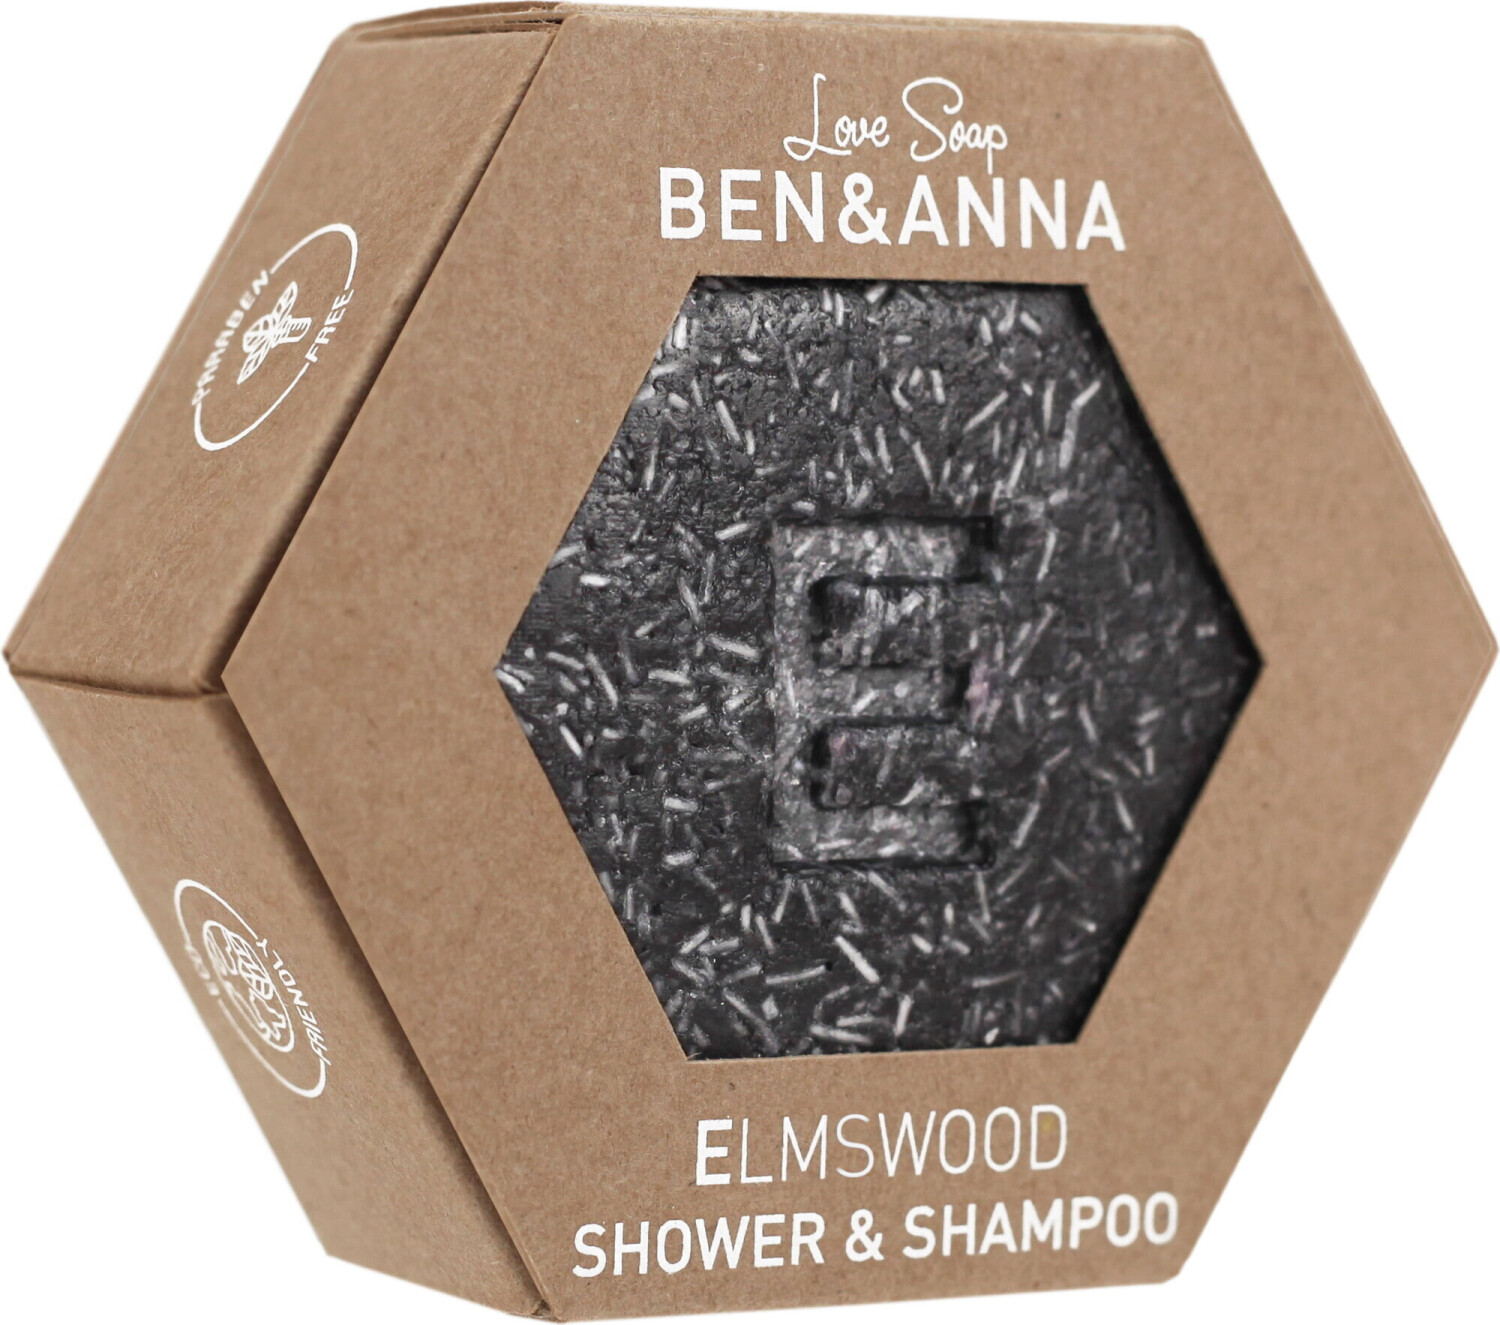 Photos - Shower Gel Ben & Anna Ben & Anna Love Soap Elmswood Shower & Shampoo (60 g)